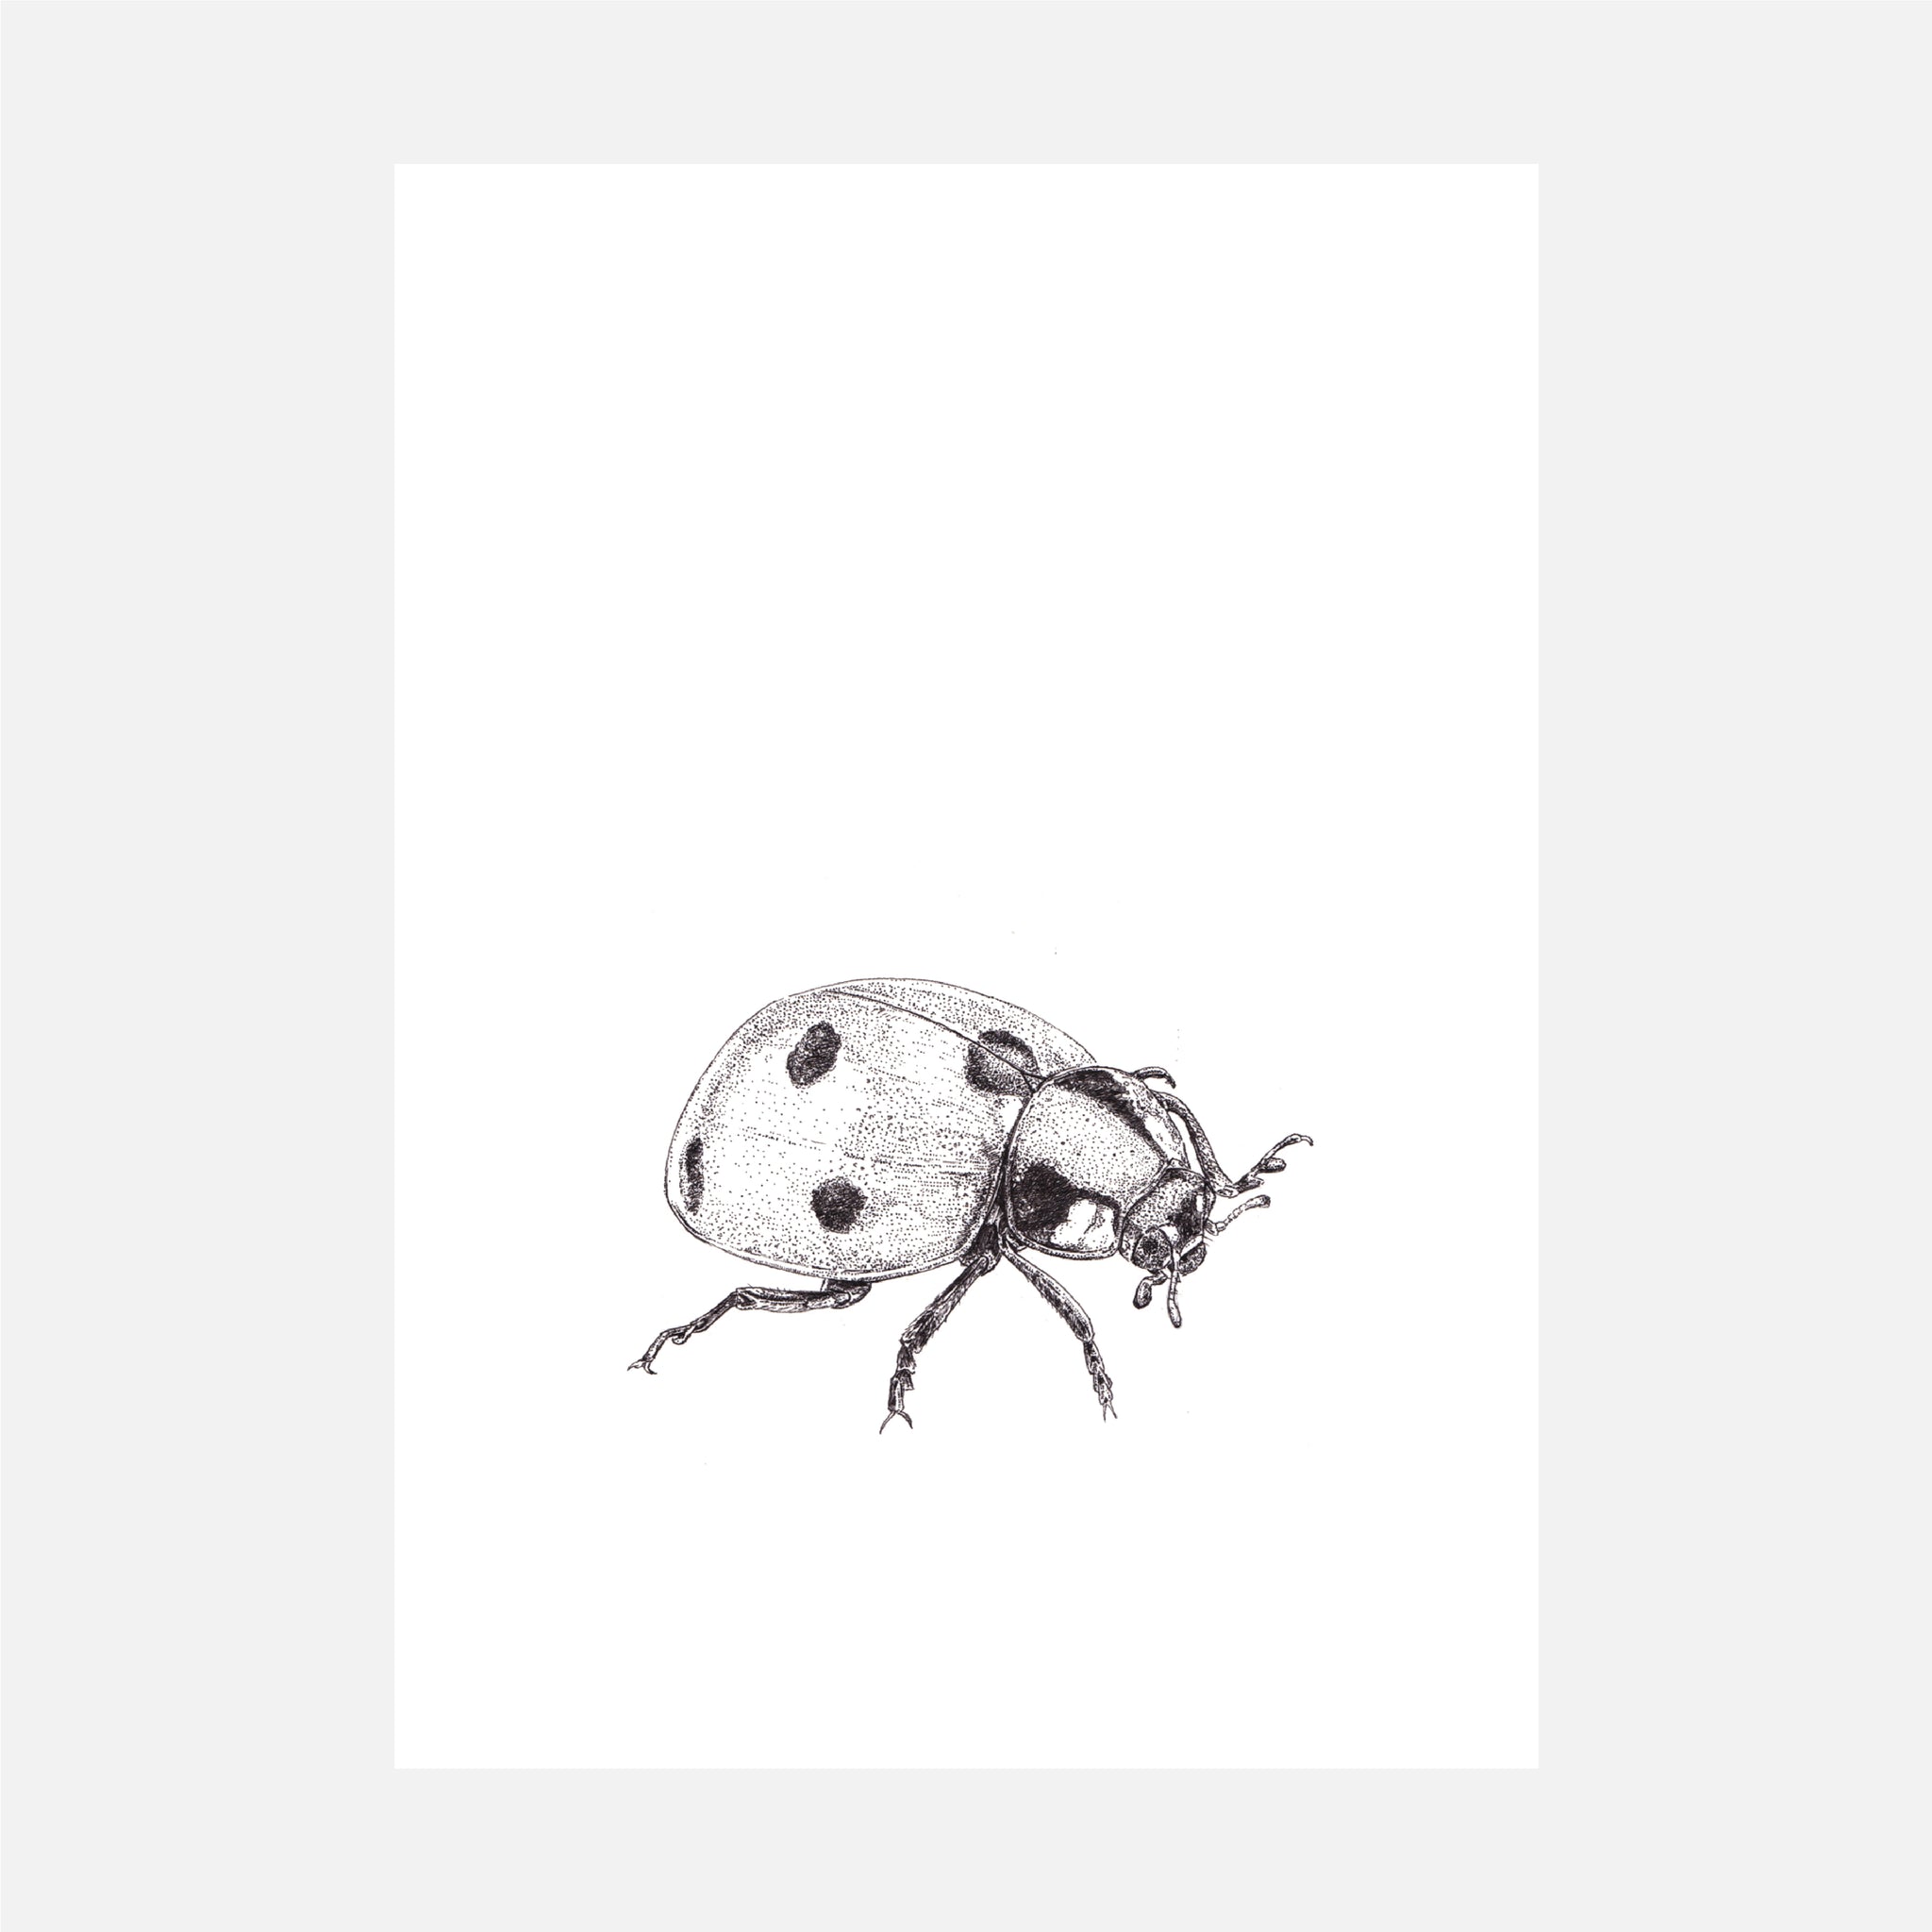 Coccinella Septempunctata - Seven Spotted Ladybird Pen & Ink Illustration